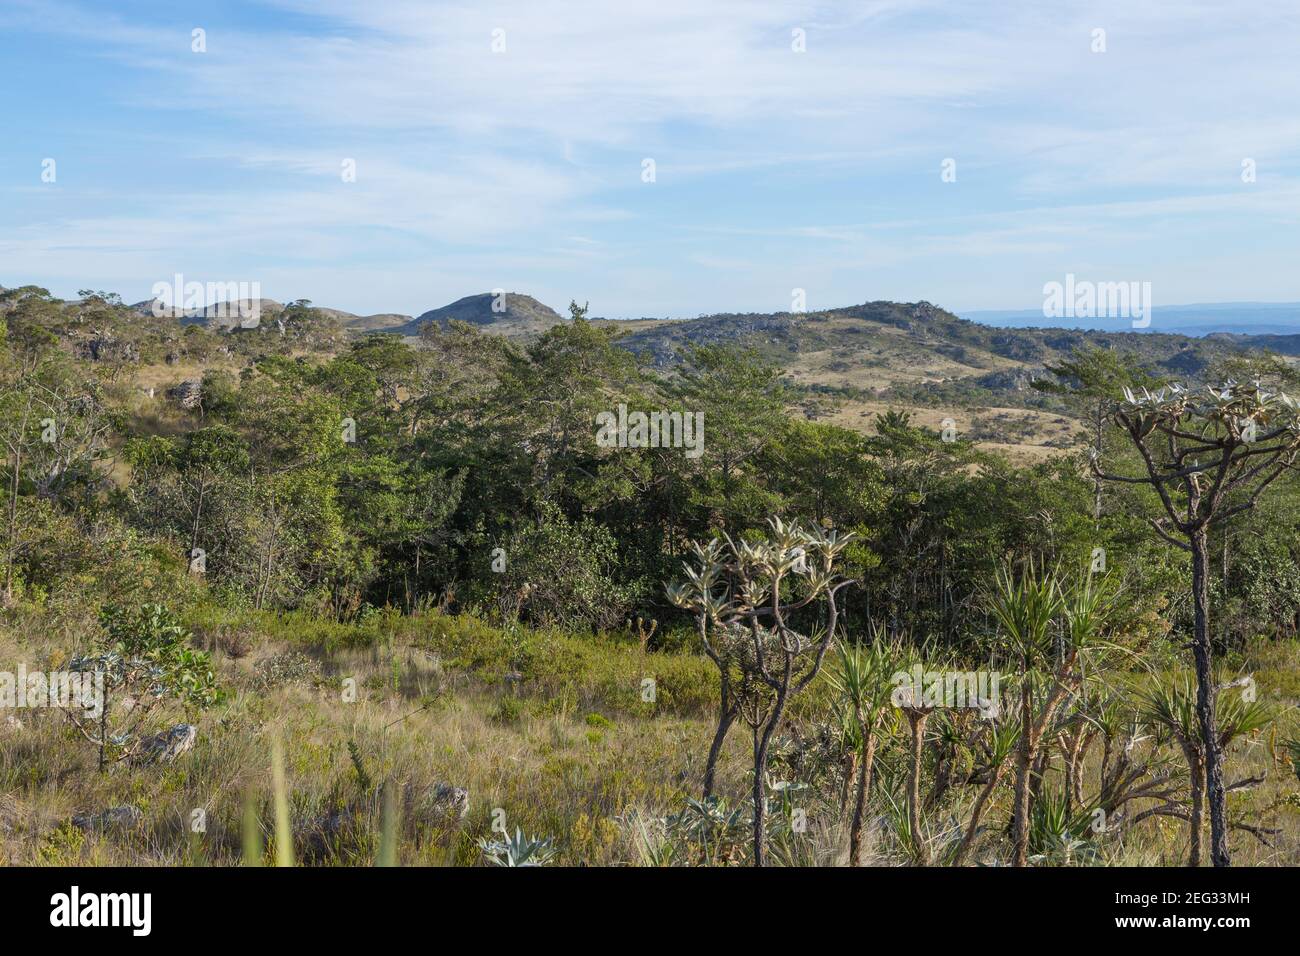 Landscape of the Morro do Camelinho close to the town of Gouveia in Minas Gerais, Brazil Stock Photo